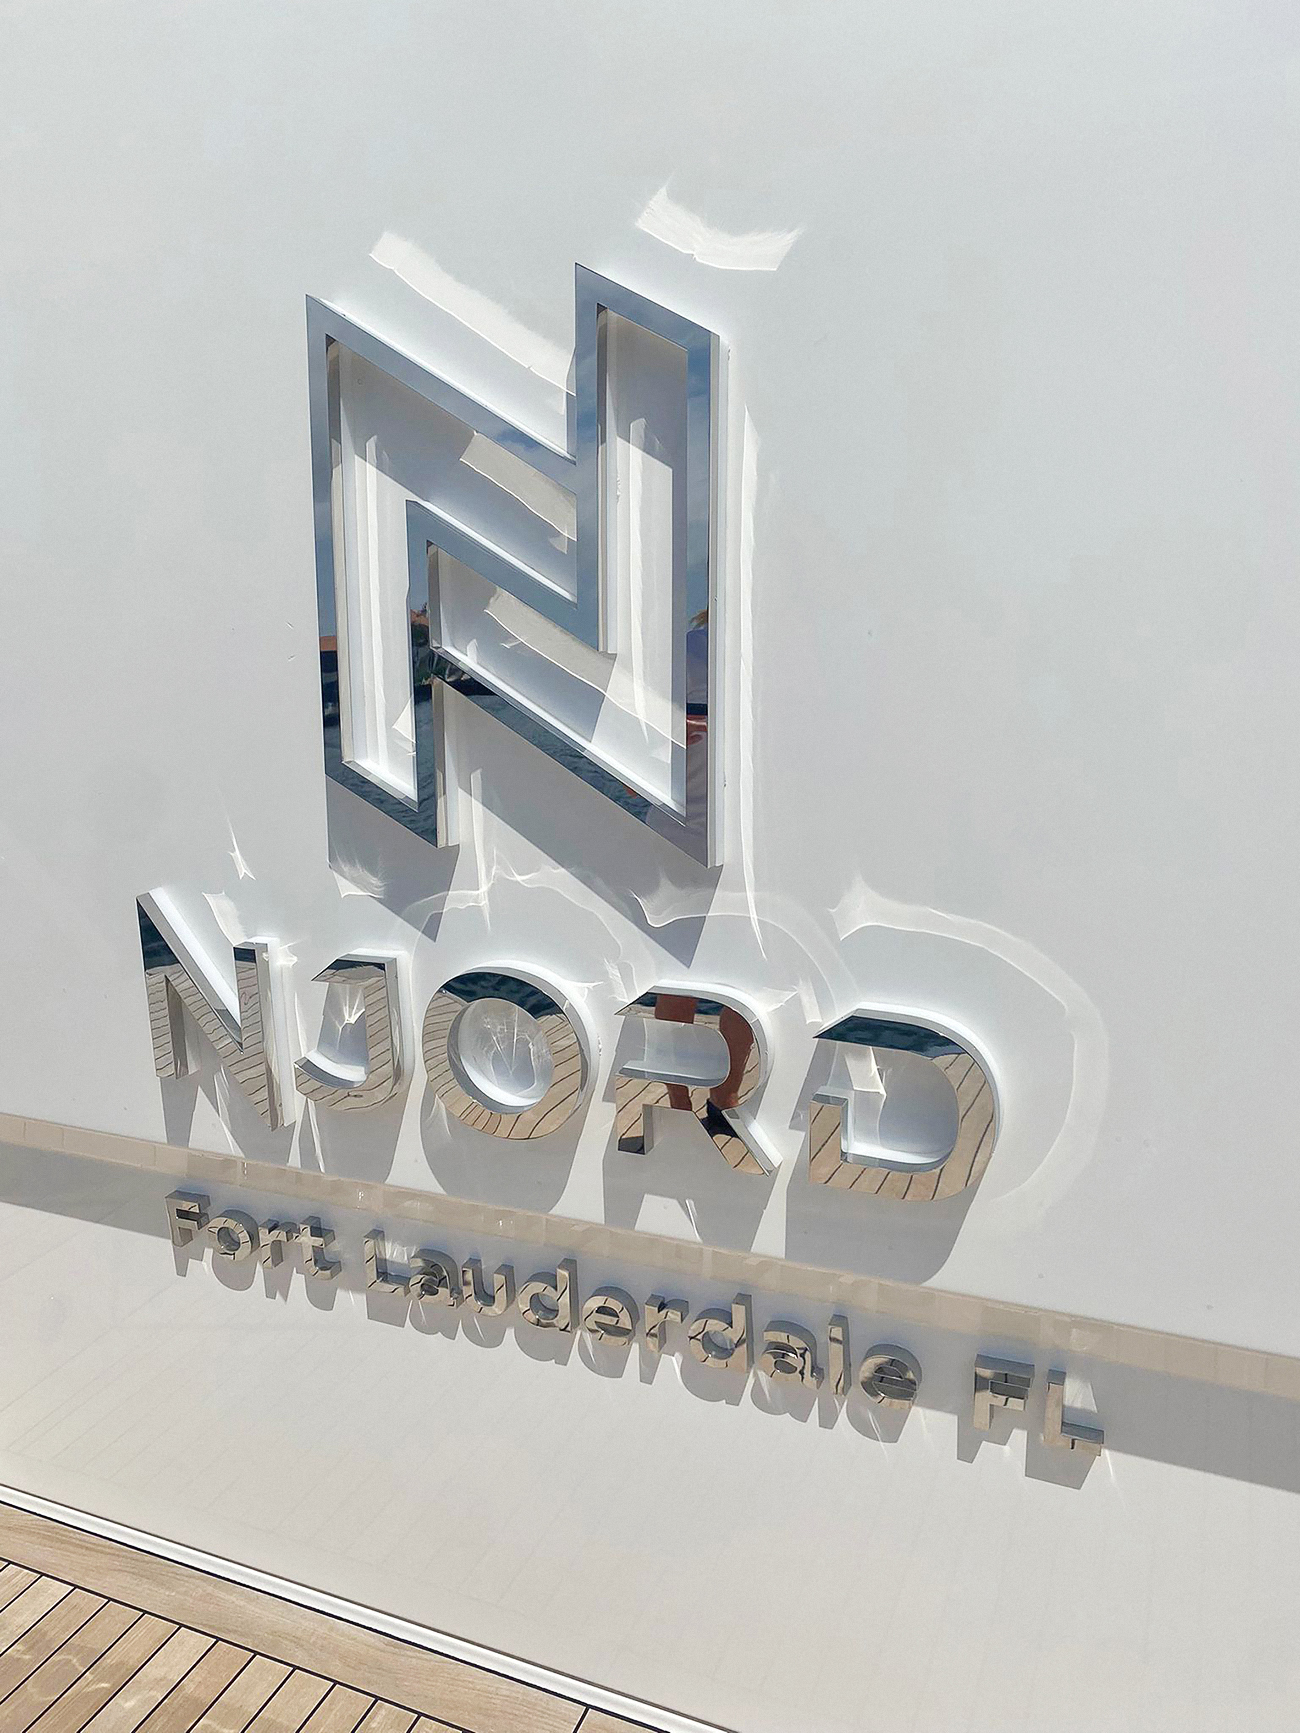 Njord – Logo Design